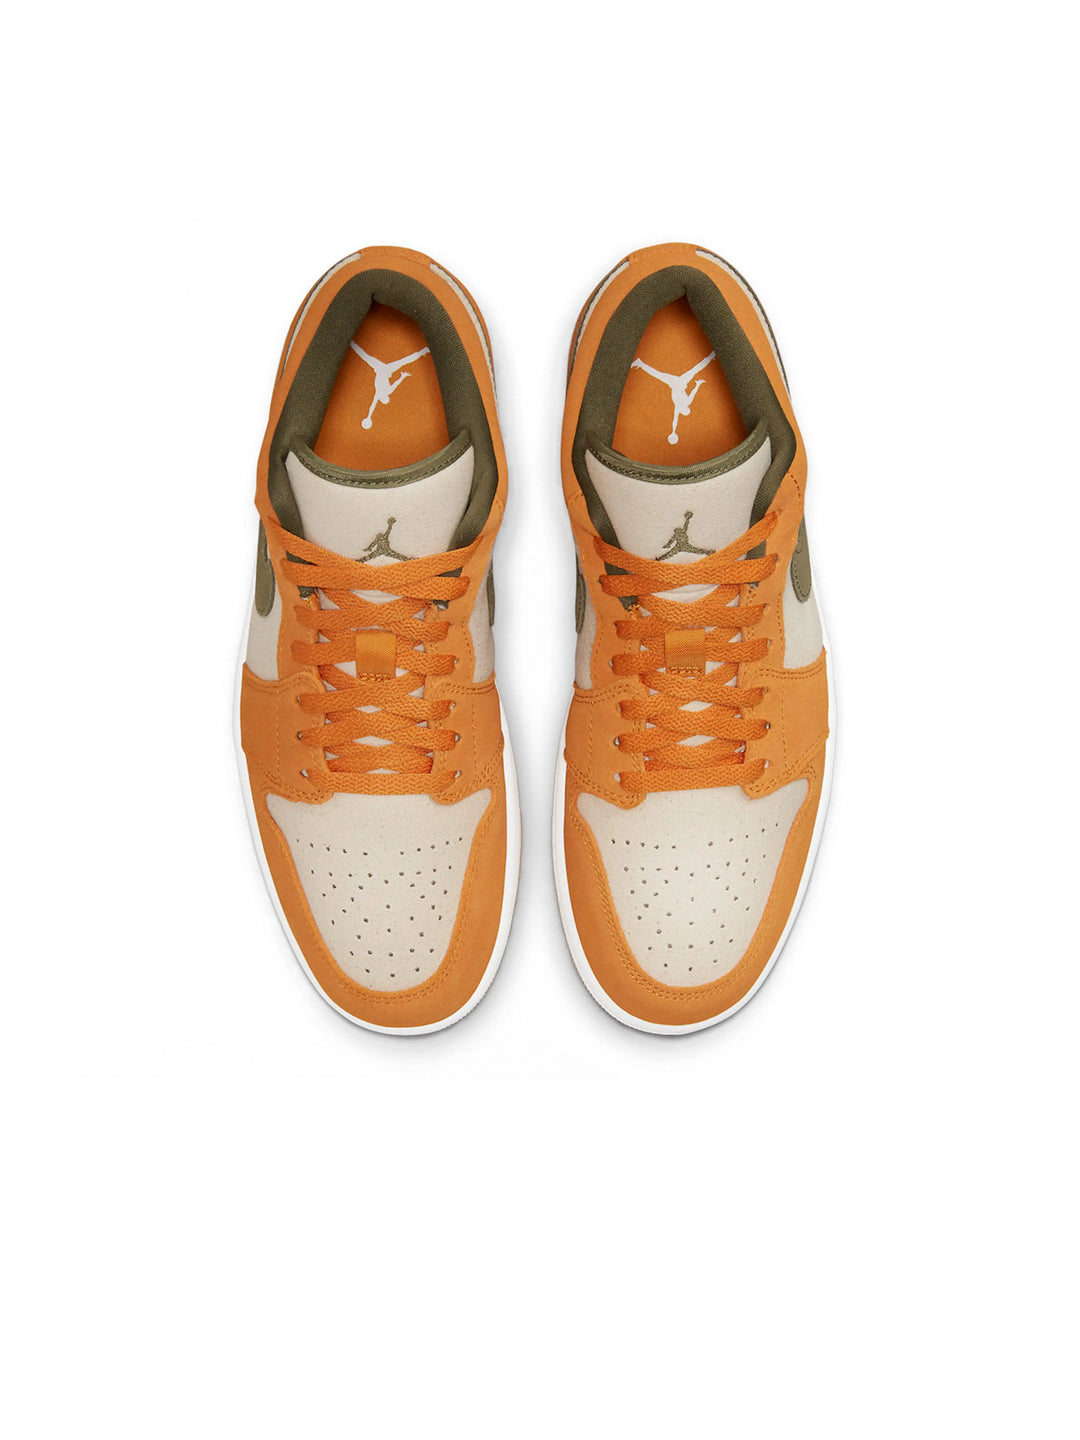 Nike Air Jordan 1 Low SE Orange Olive Prior